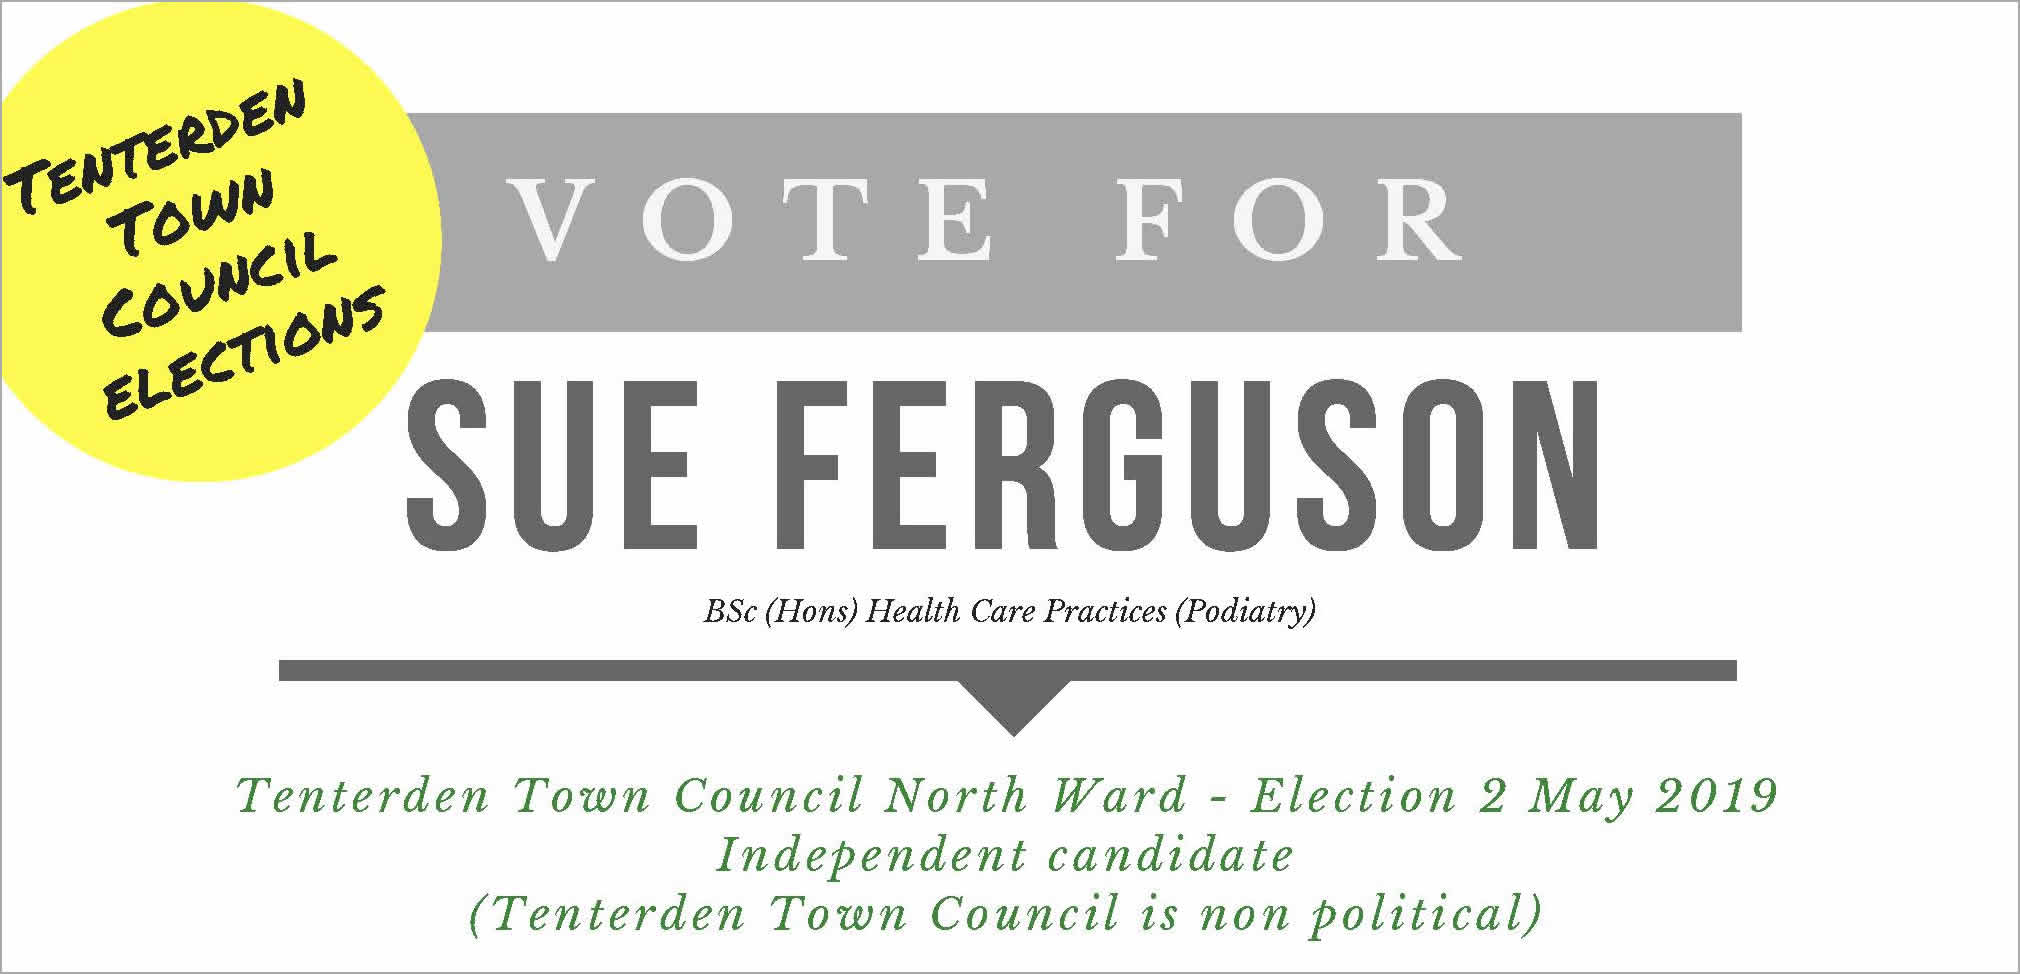 Vote for Sue Ferguson